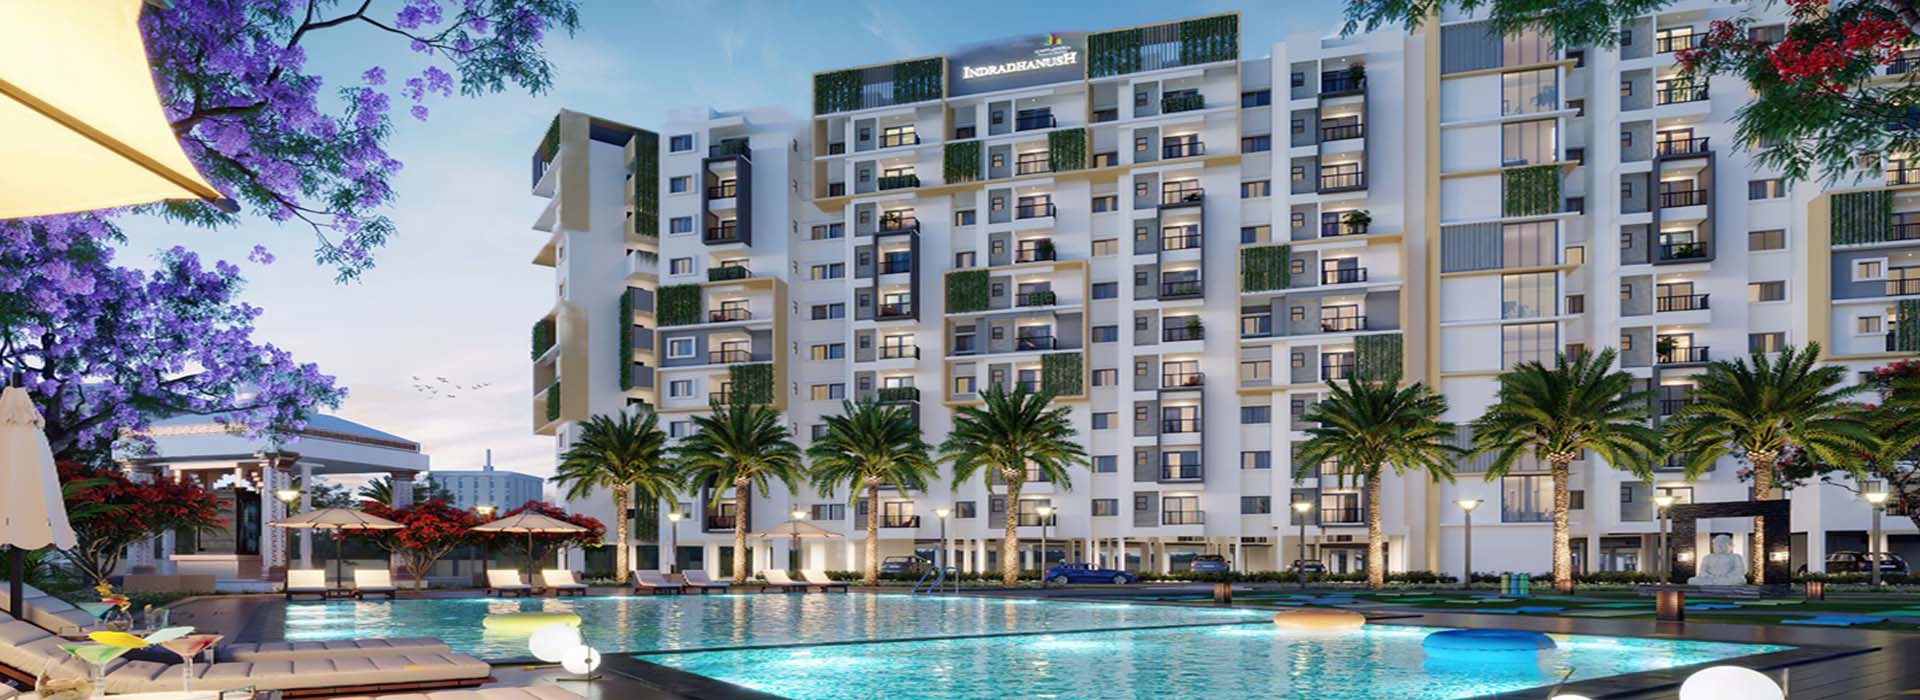 Sowparnika Indradhanush presents 1,2 & 3 BHK Premium apartments Hoskote KR Puram, Bangalore East